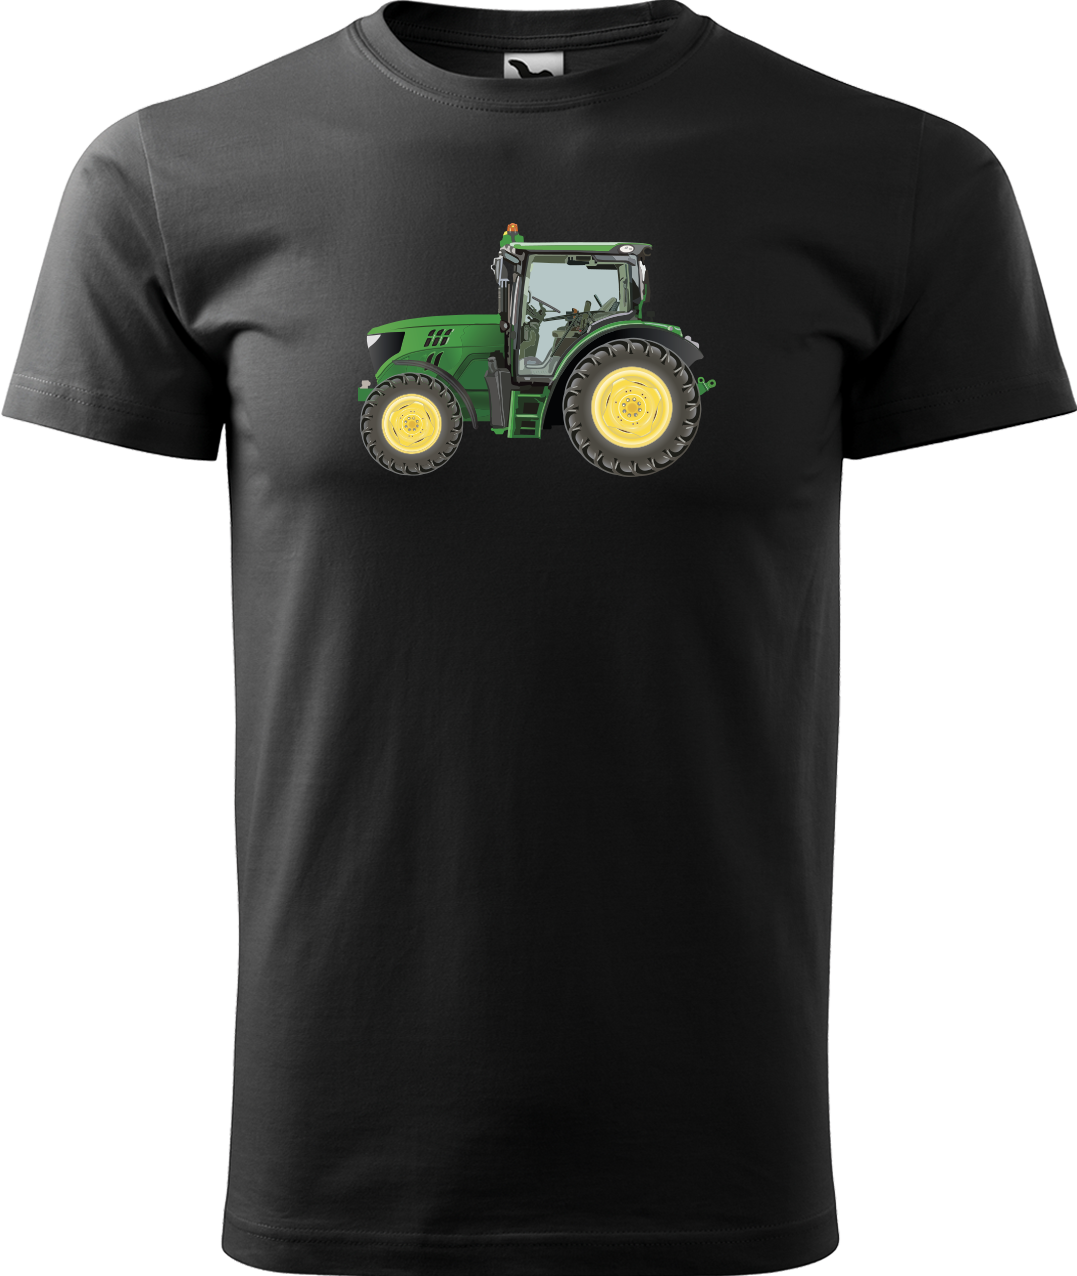 Tričko s traktorem - Zelený traktor Velikost: S, Barva: Černá (01)